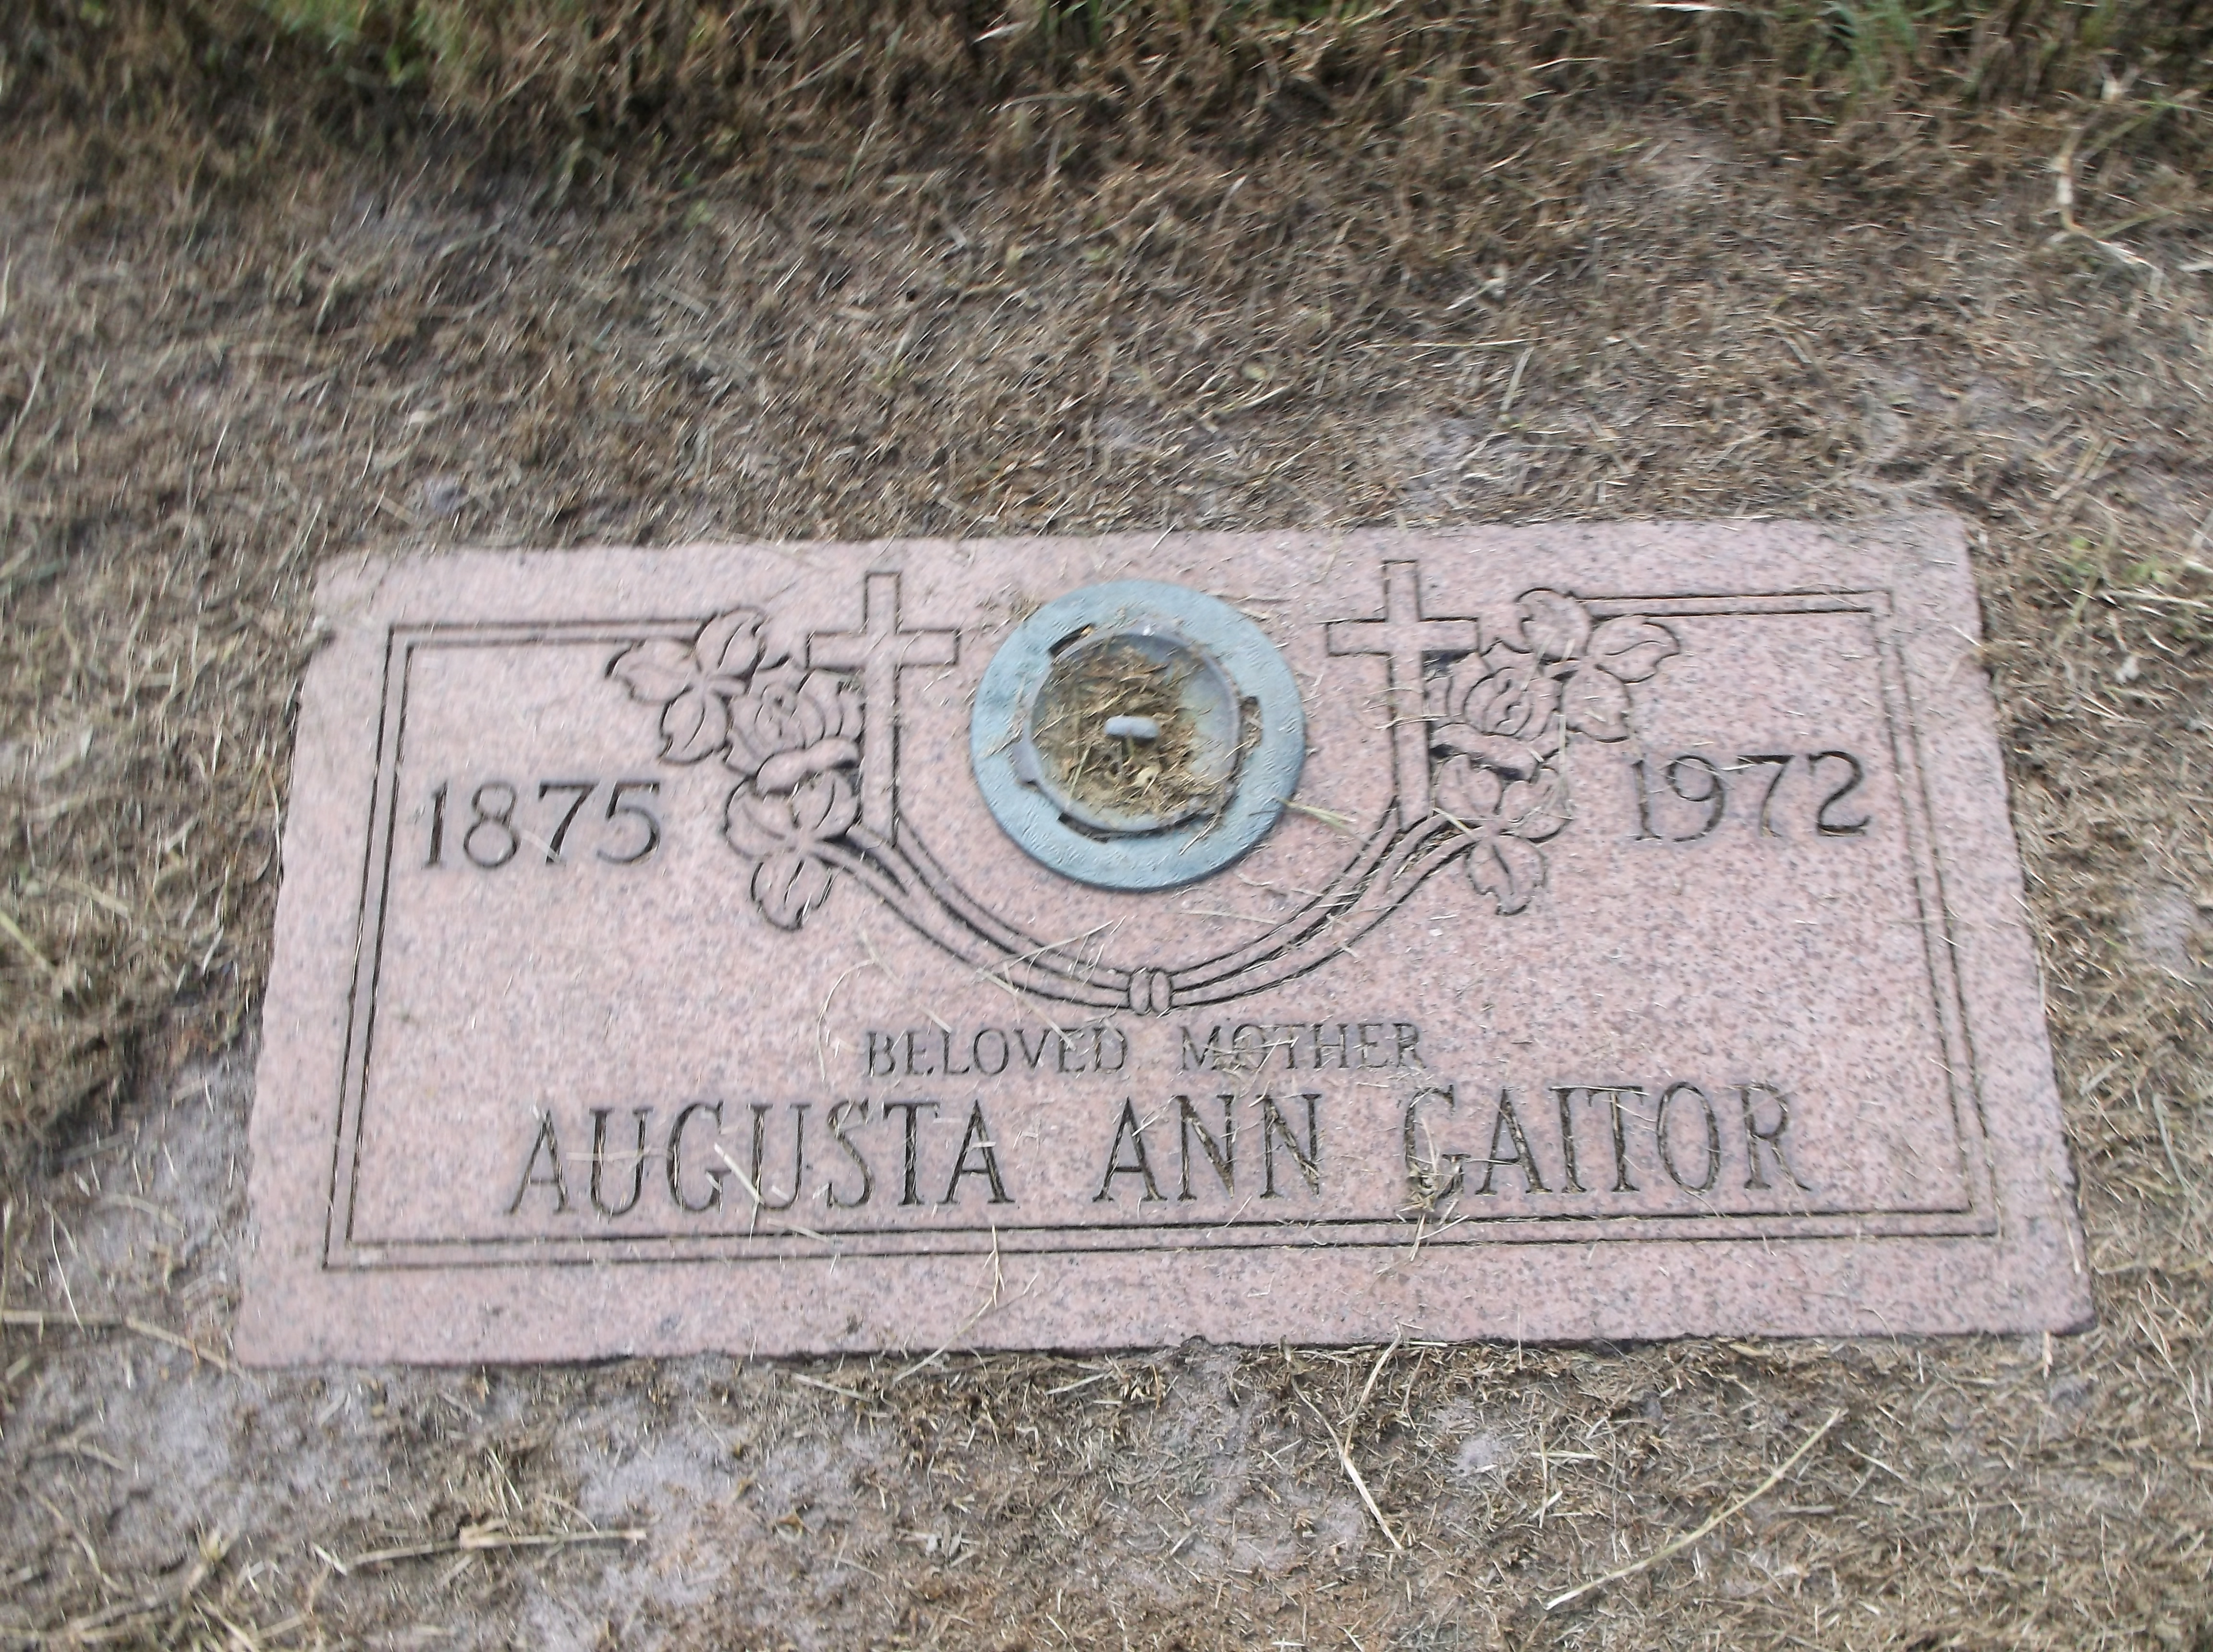 Augusta Ann Gaitor